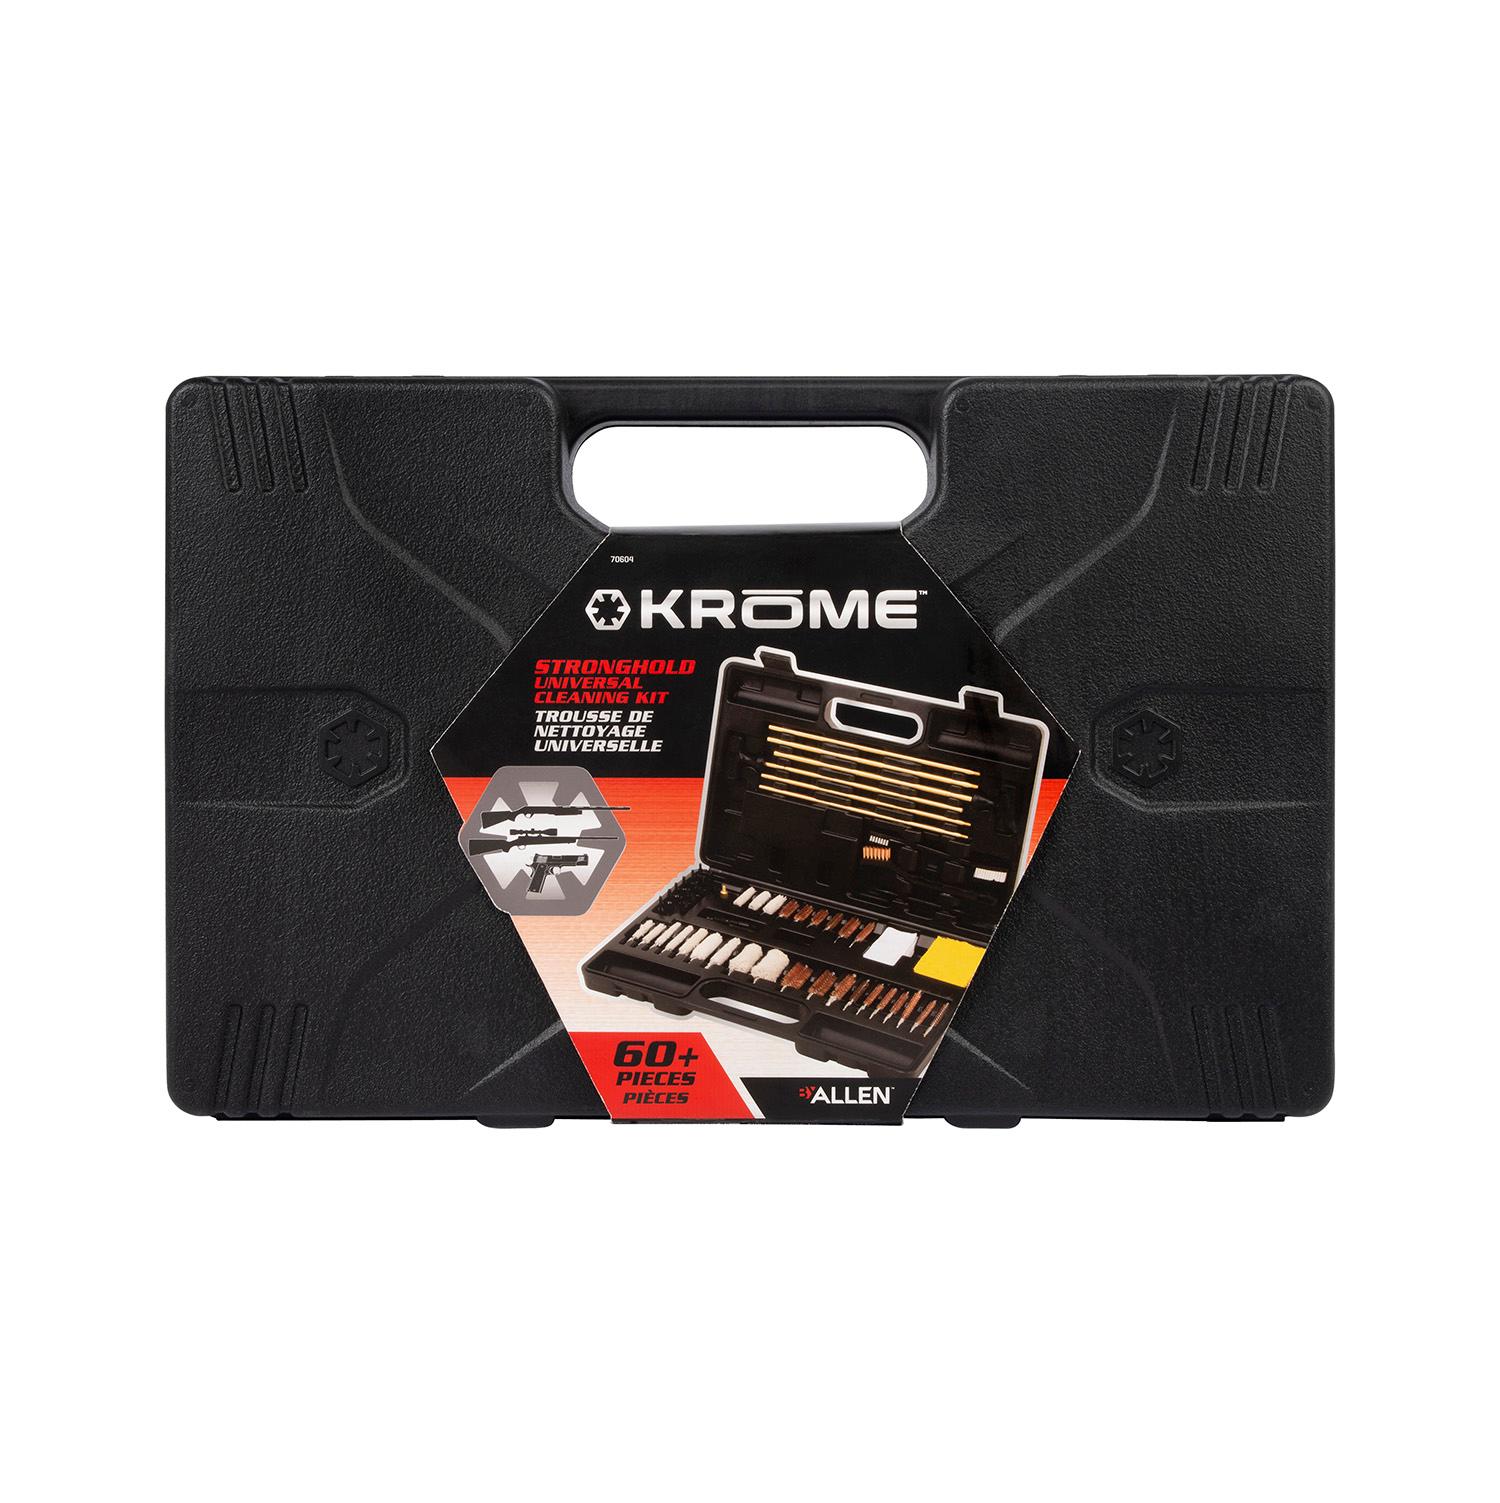  Krome 70604 Stronghold Universal Cleaning Kit Multi- Caliber Handguns, Rifles, Shotguns 60 Pieces